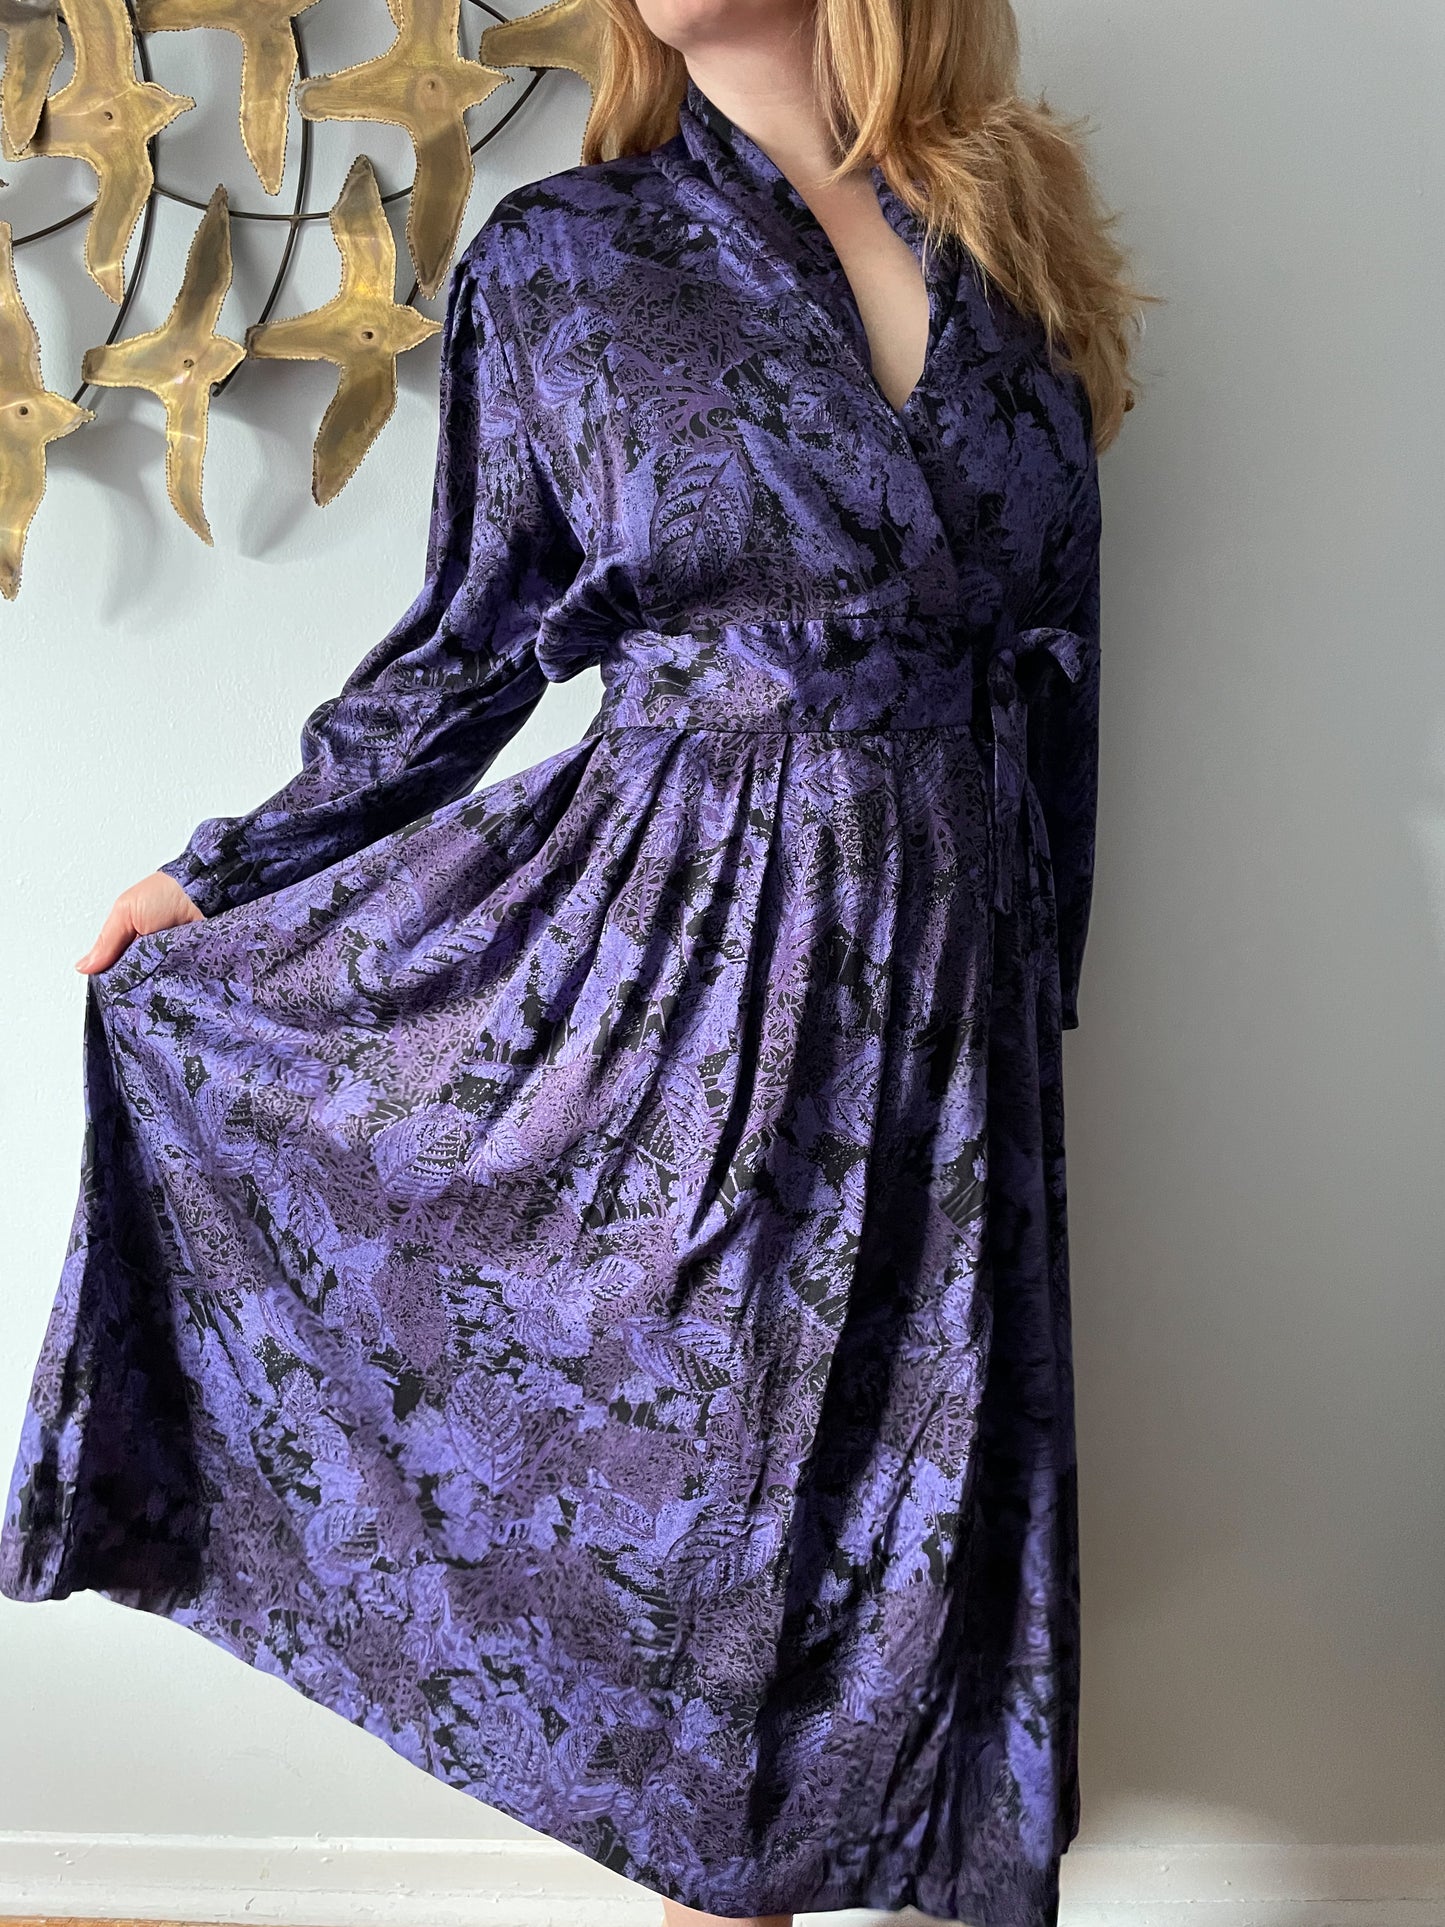 Vintage Principles Dark Purple Leaf Print Wrap Style Midi Dress - S/M/L